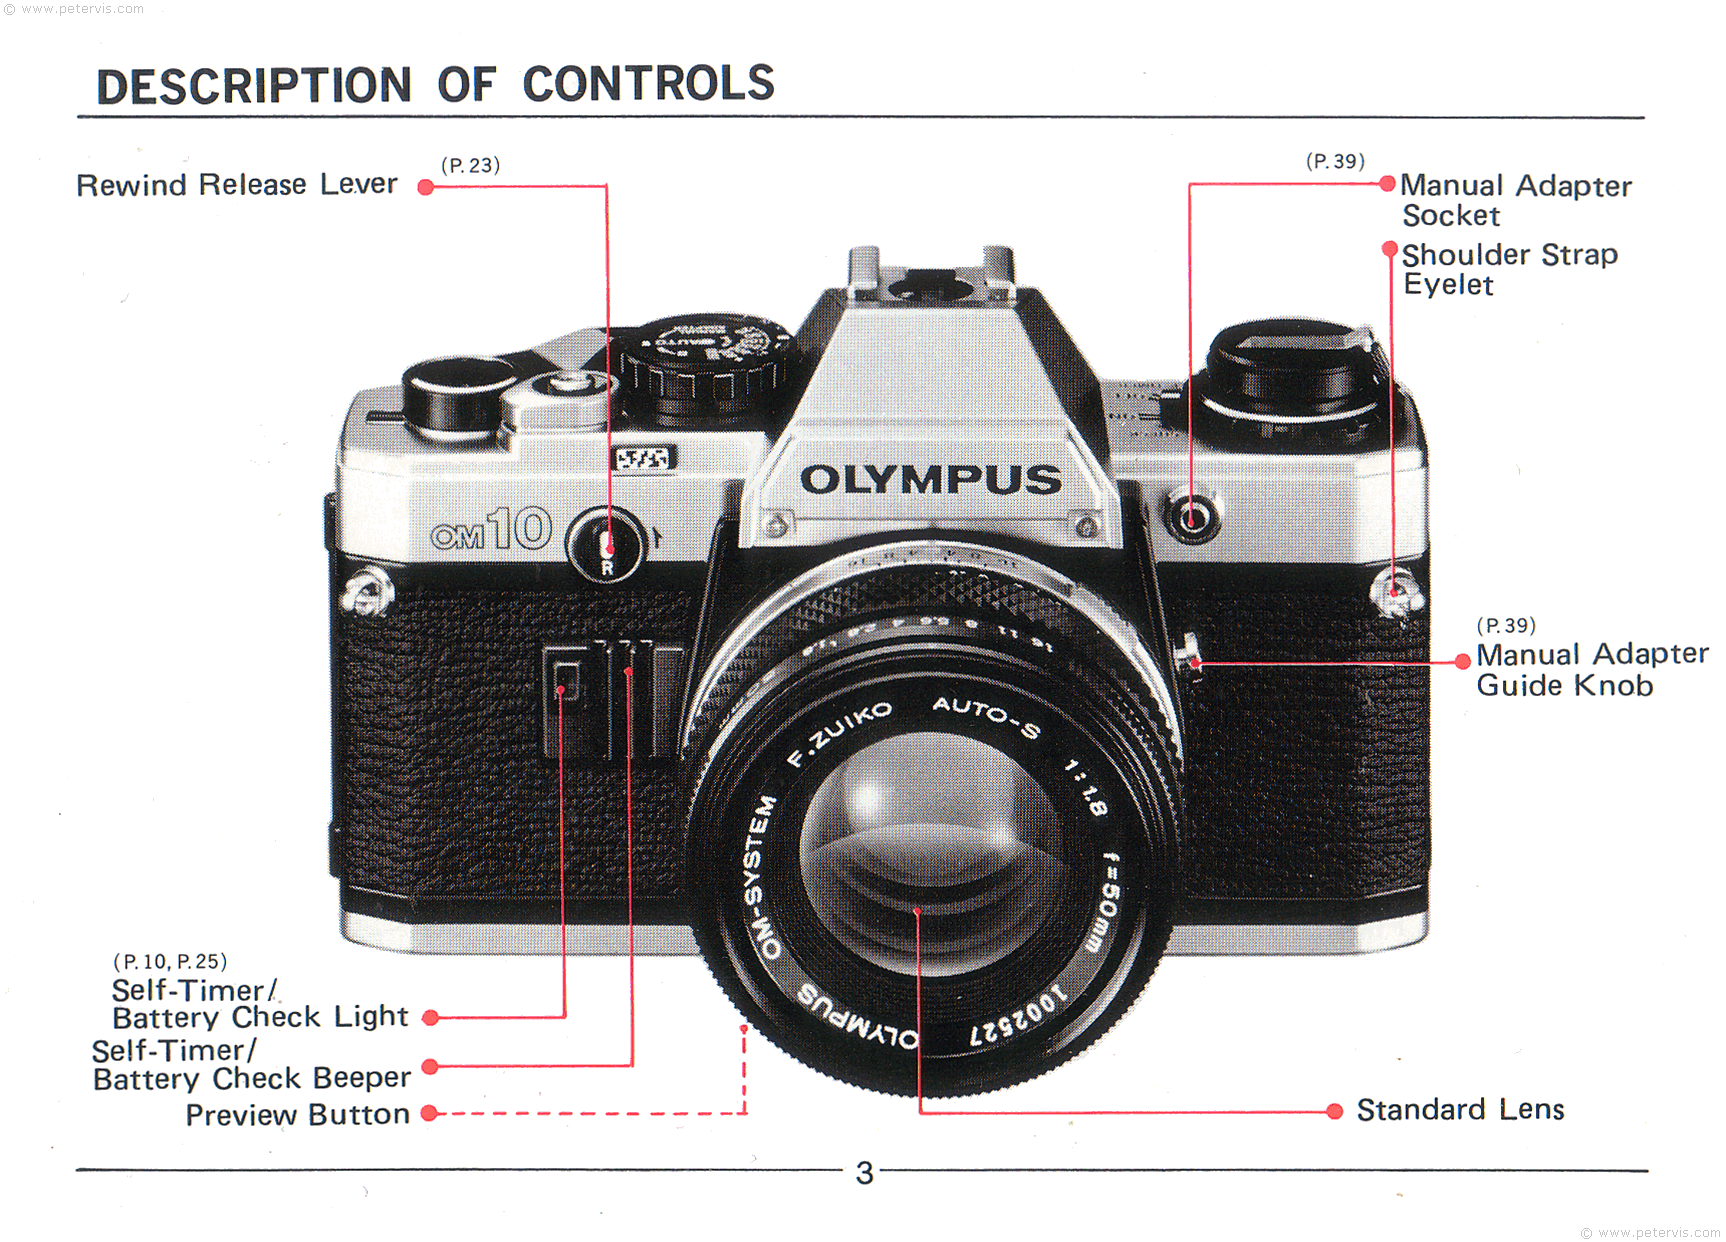 Olympus om10 manual adapter instructions